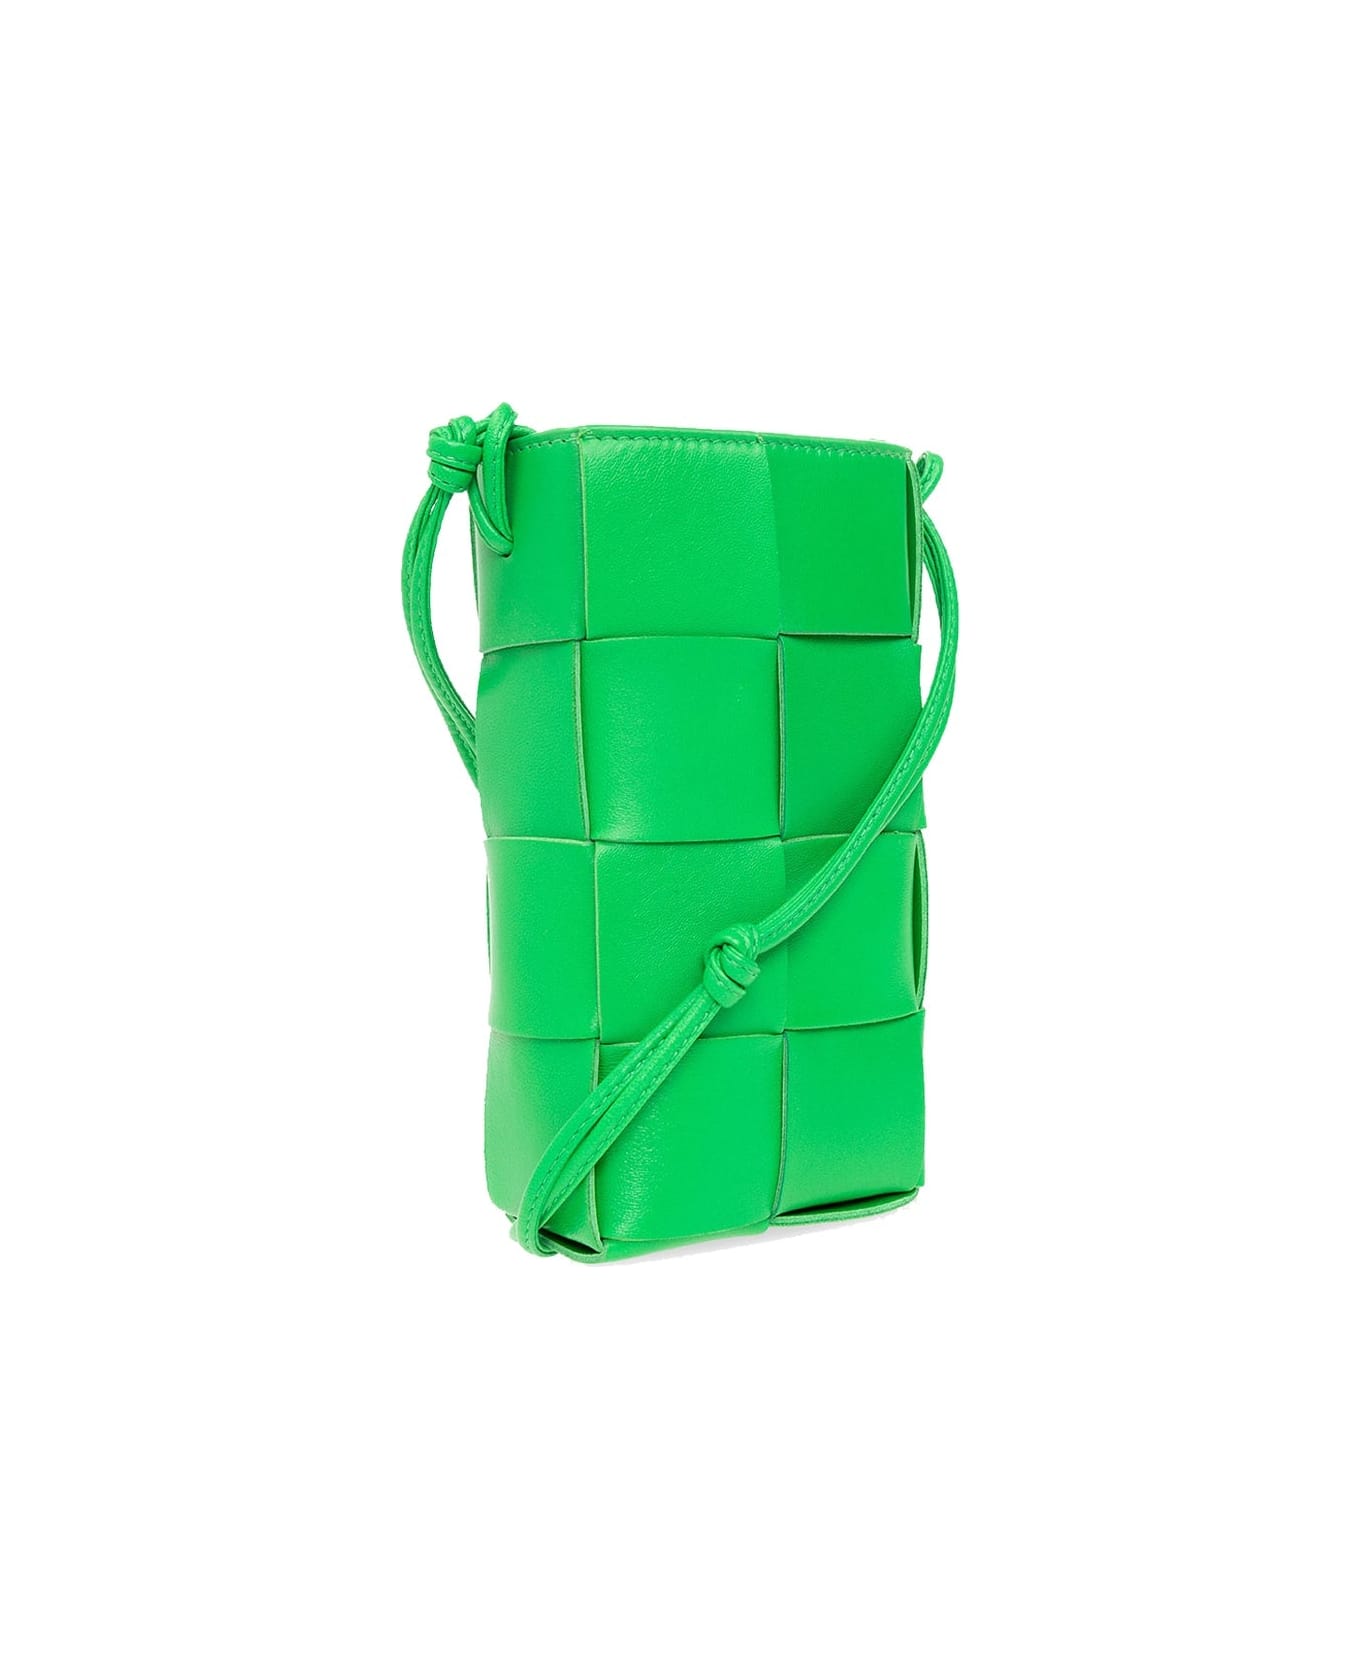 Bottega Veneta Phone Pouch Shoulder Bag - Green デジタルアクセサリー